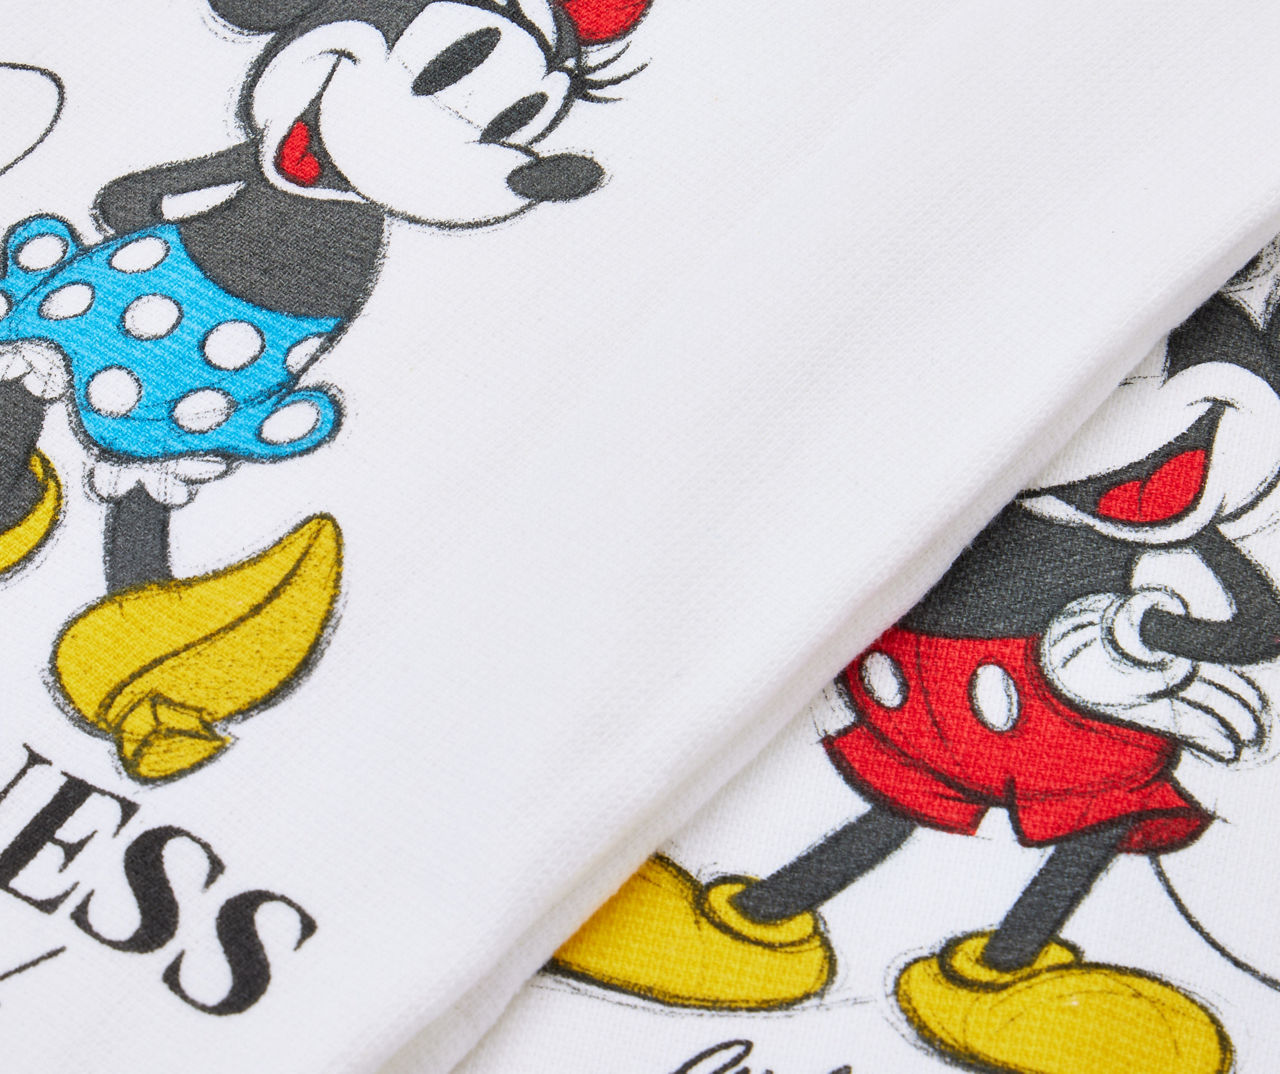 Disney Mickey & Minnie Mouse 2 Kitchen Towels